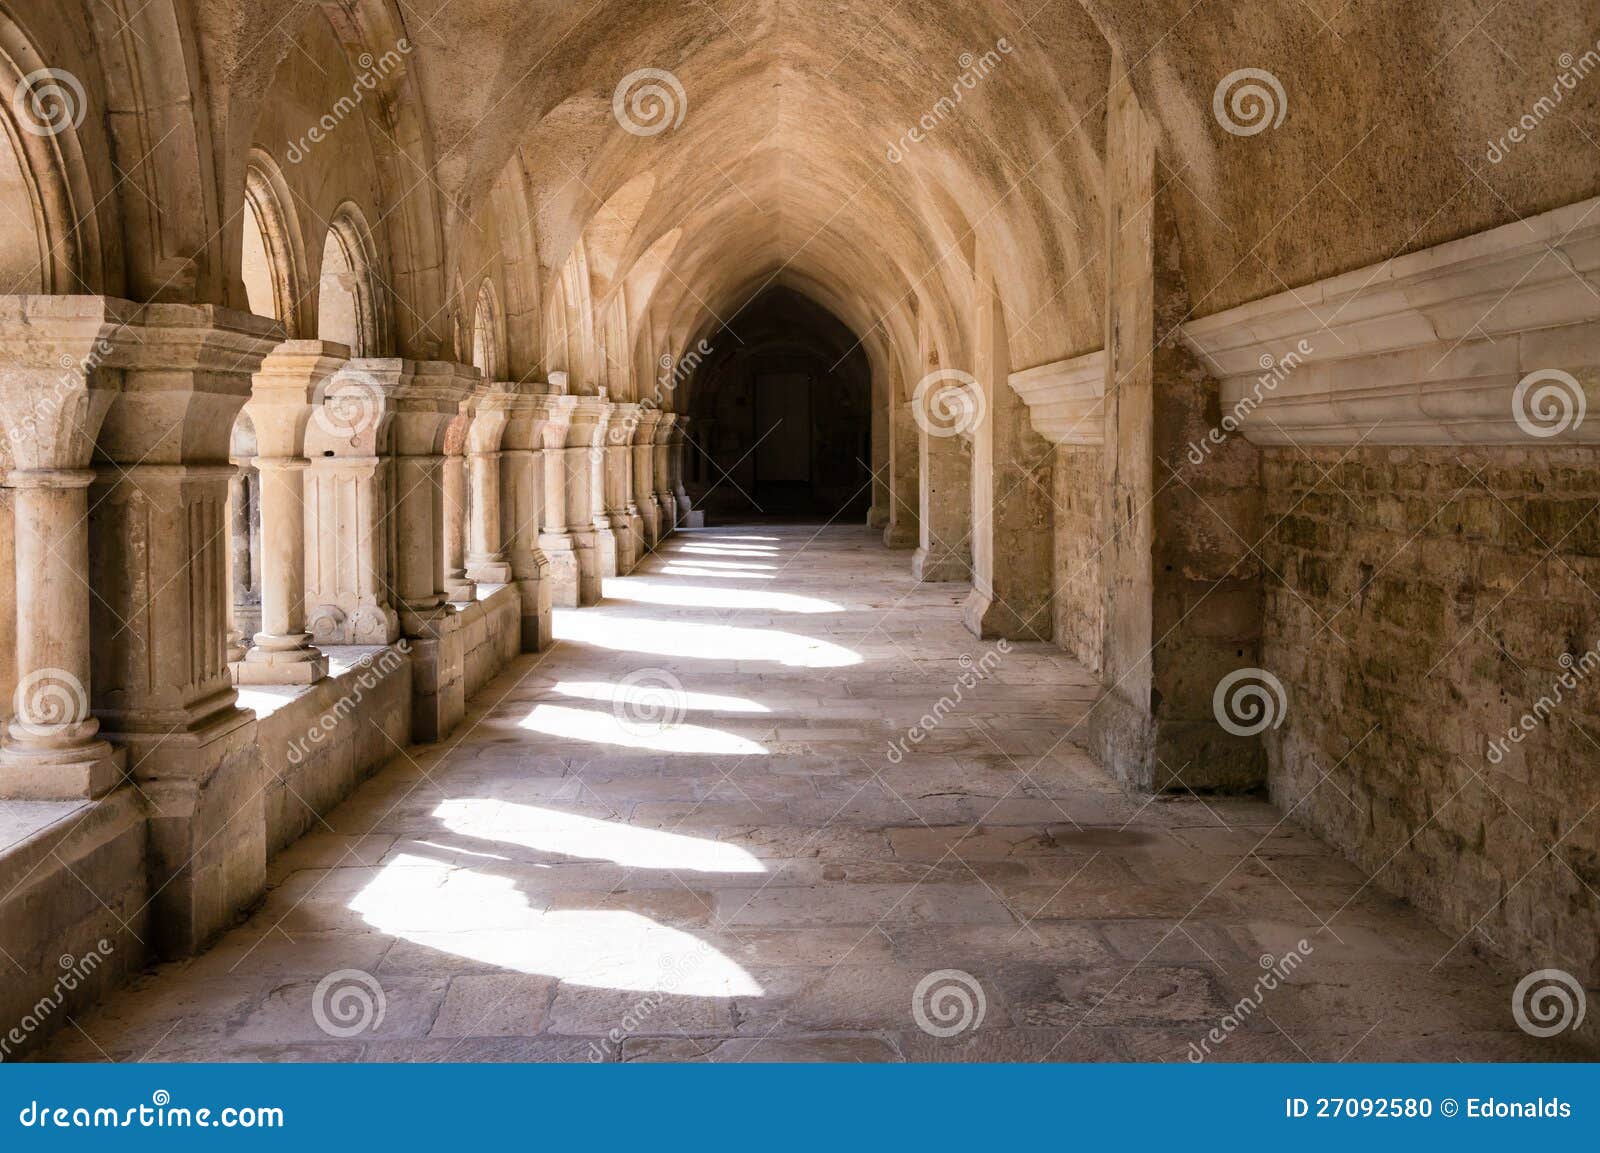 cloister at fontenay abbey